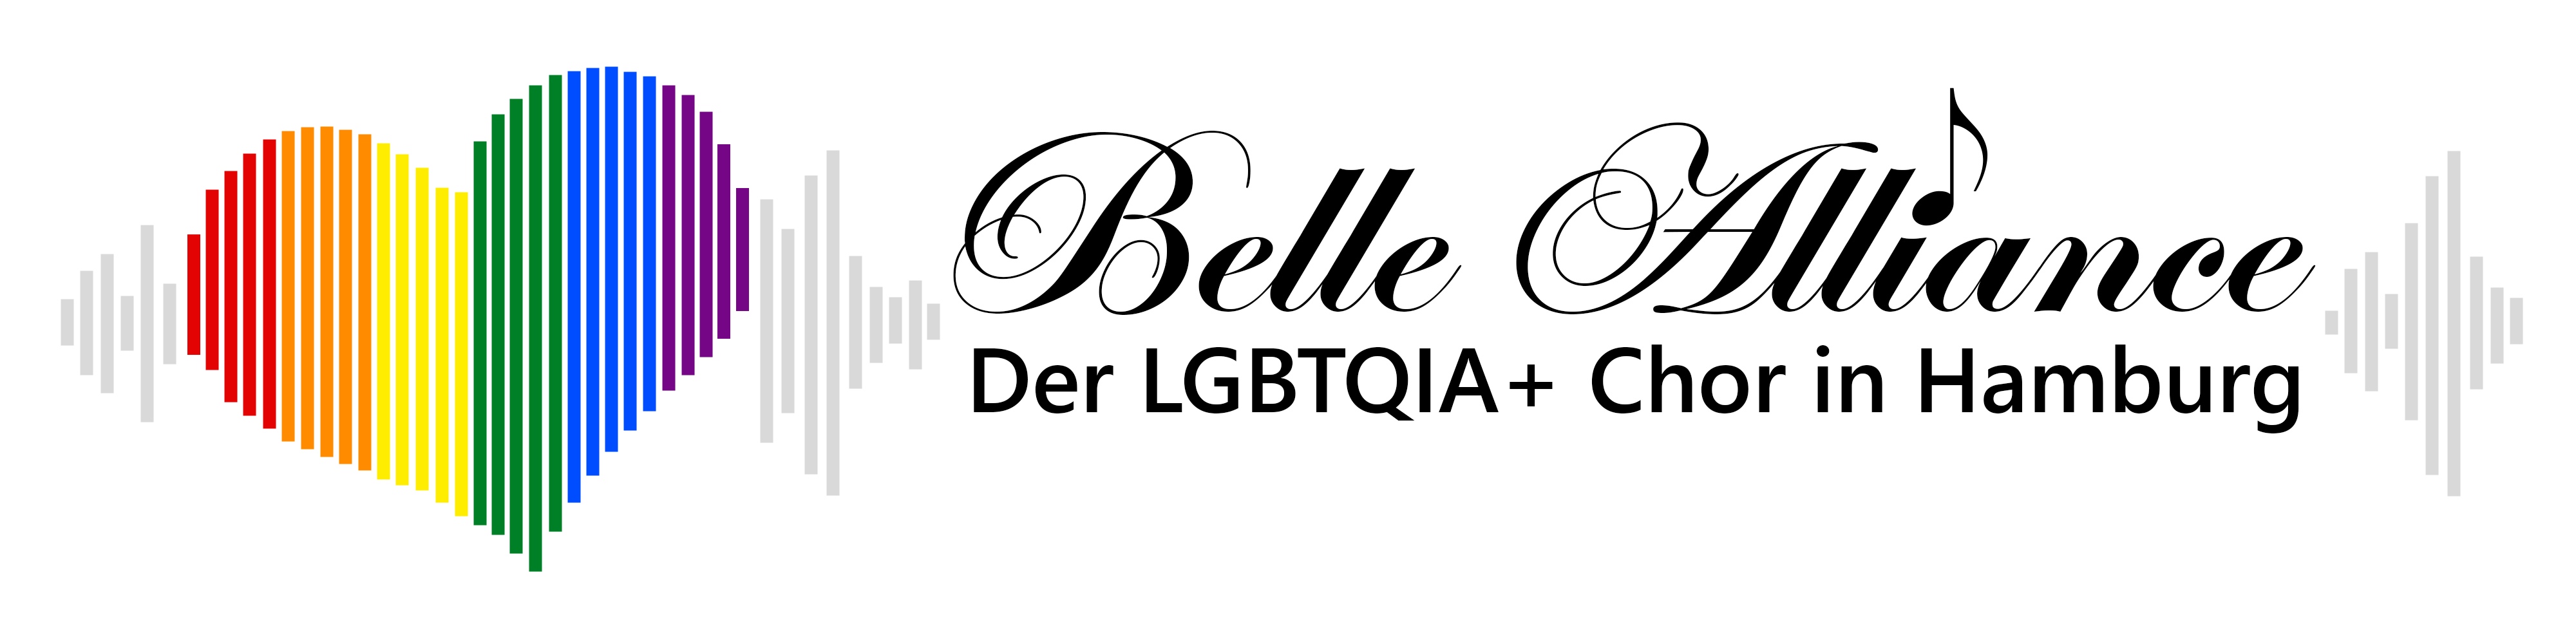 Belle Alliance LGBTQIA+ Chor in Hamburg